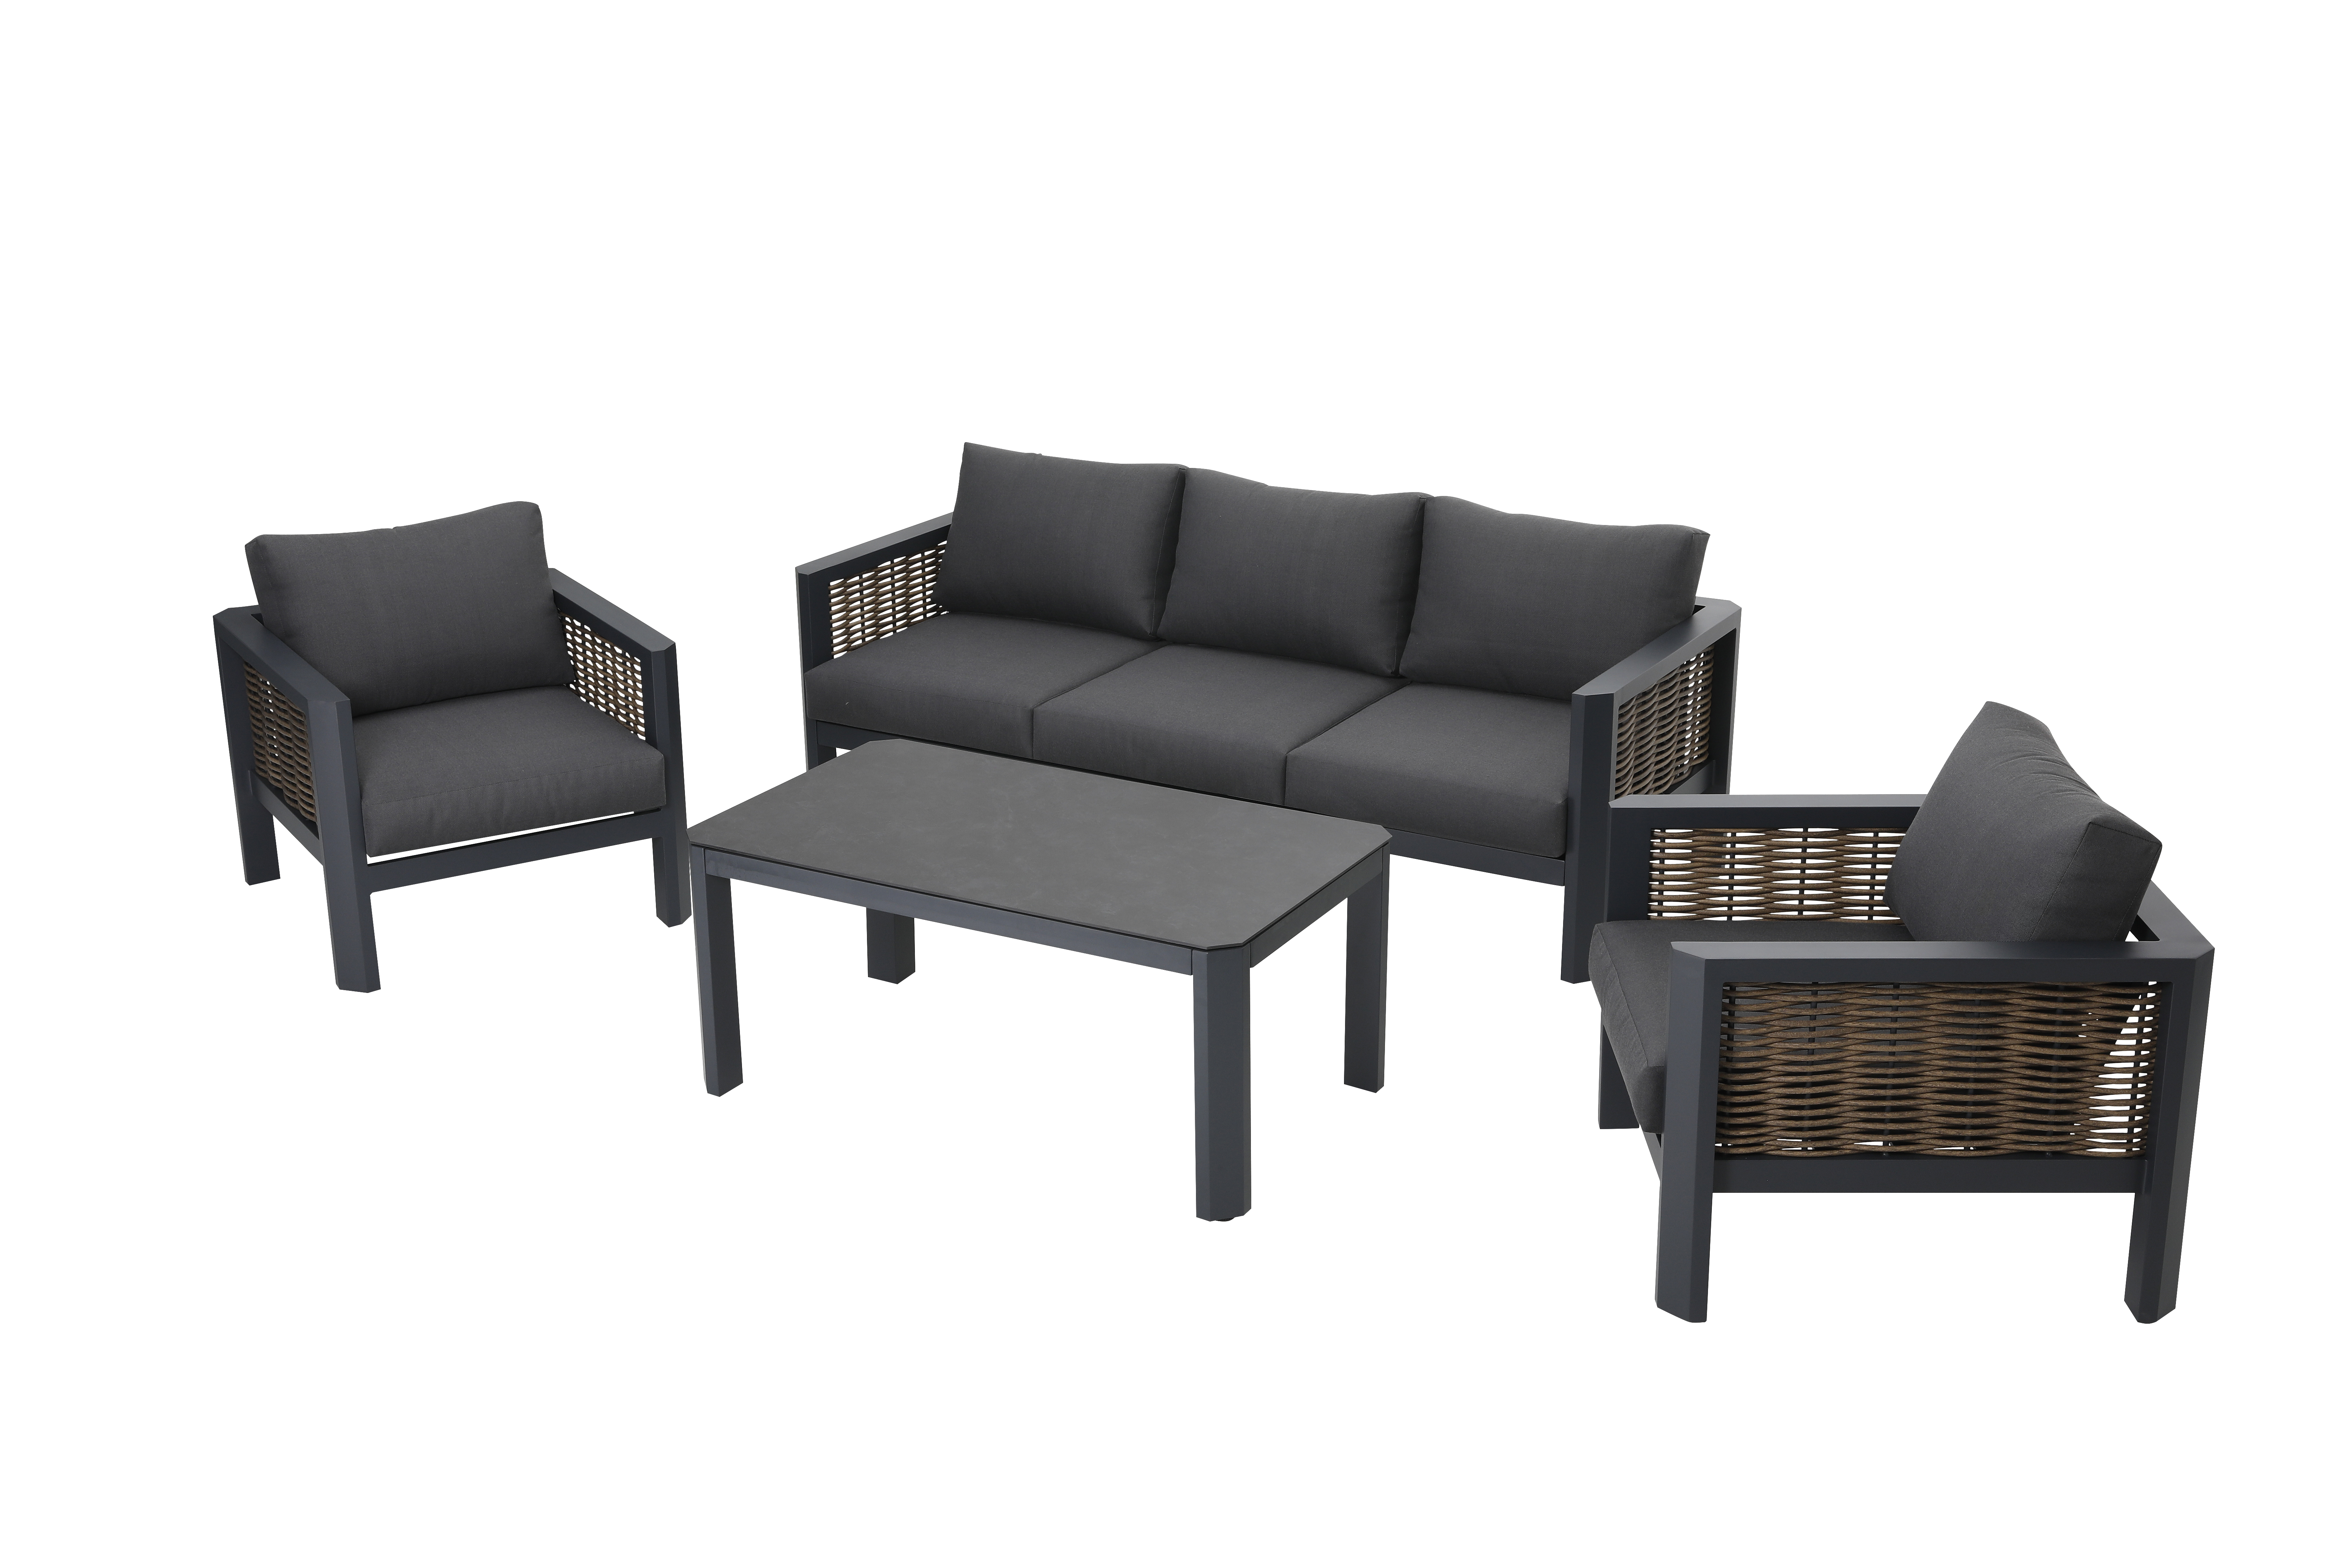 Gartenlounge Garnitur Calgary - großes Sofa + Tisch 120x70 cm + 2 bequeme Lounge Sessel